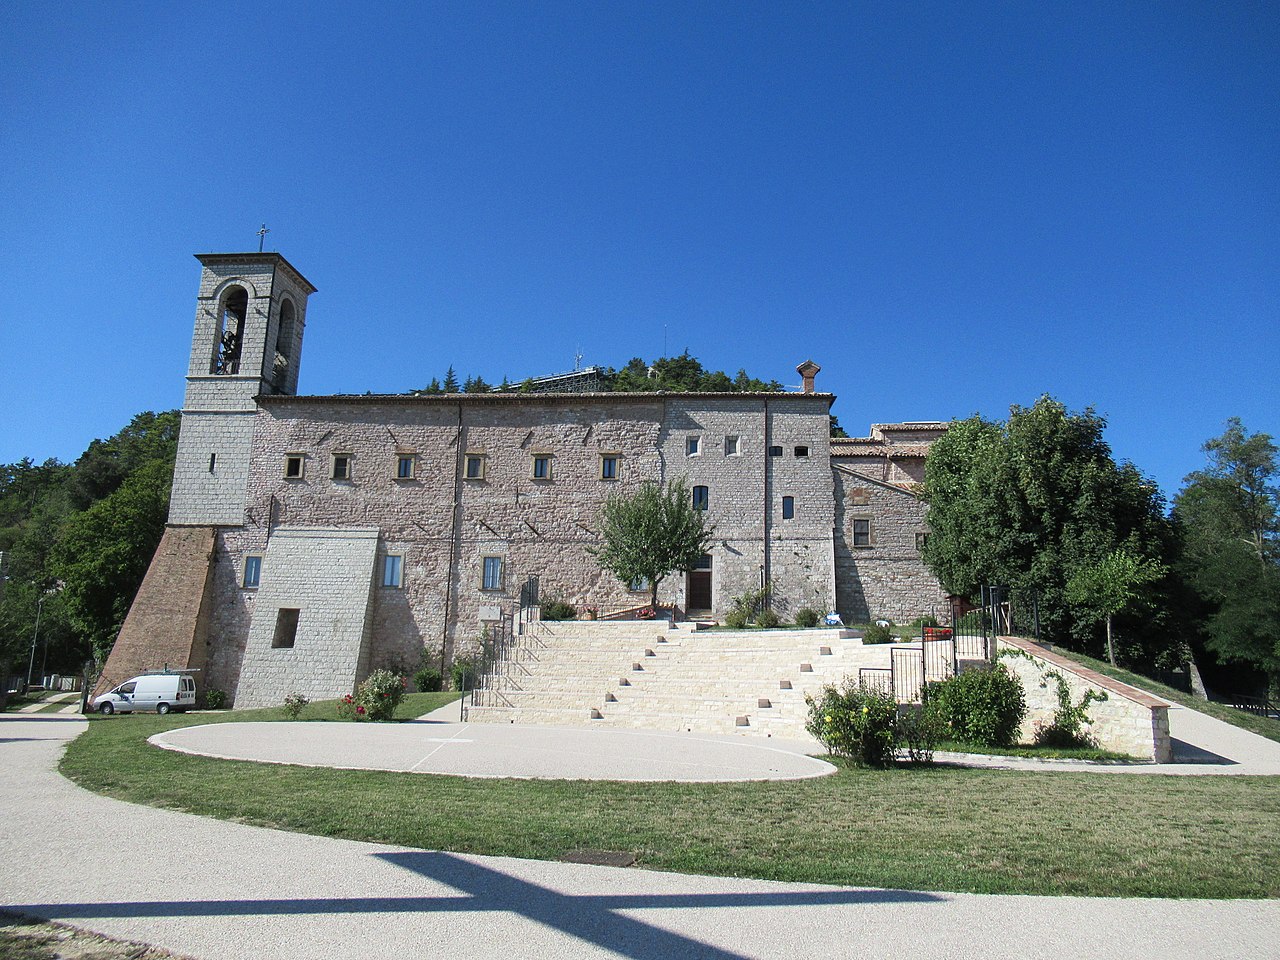 La basilica di Sant'Ubaldo
